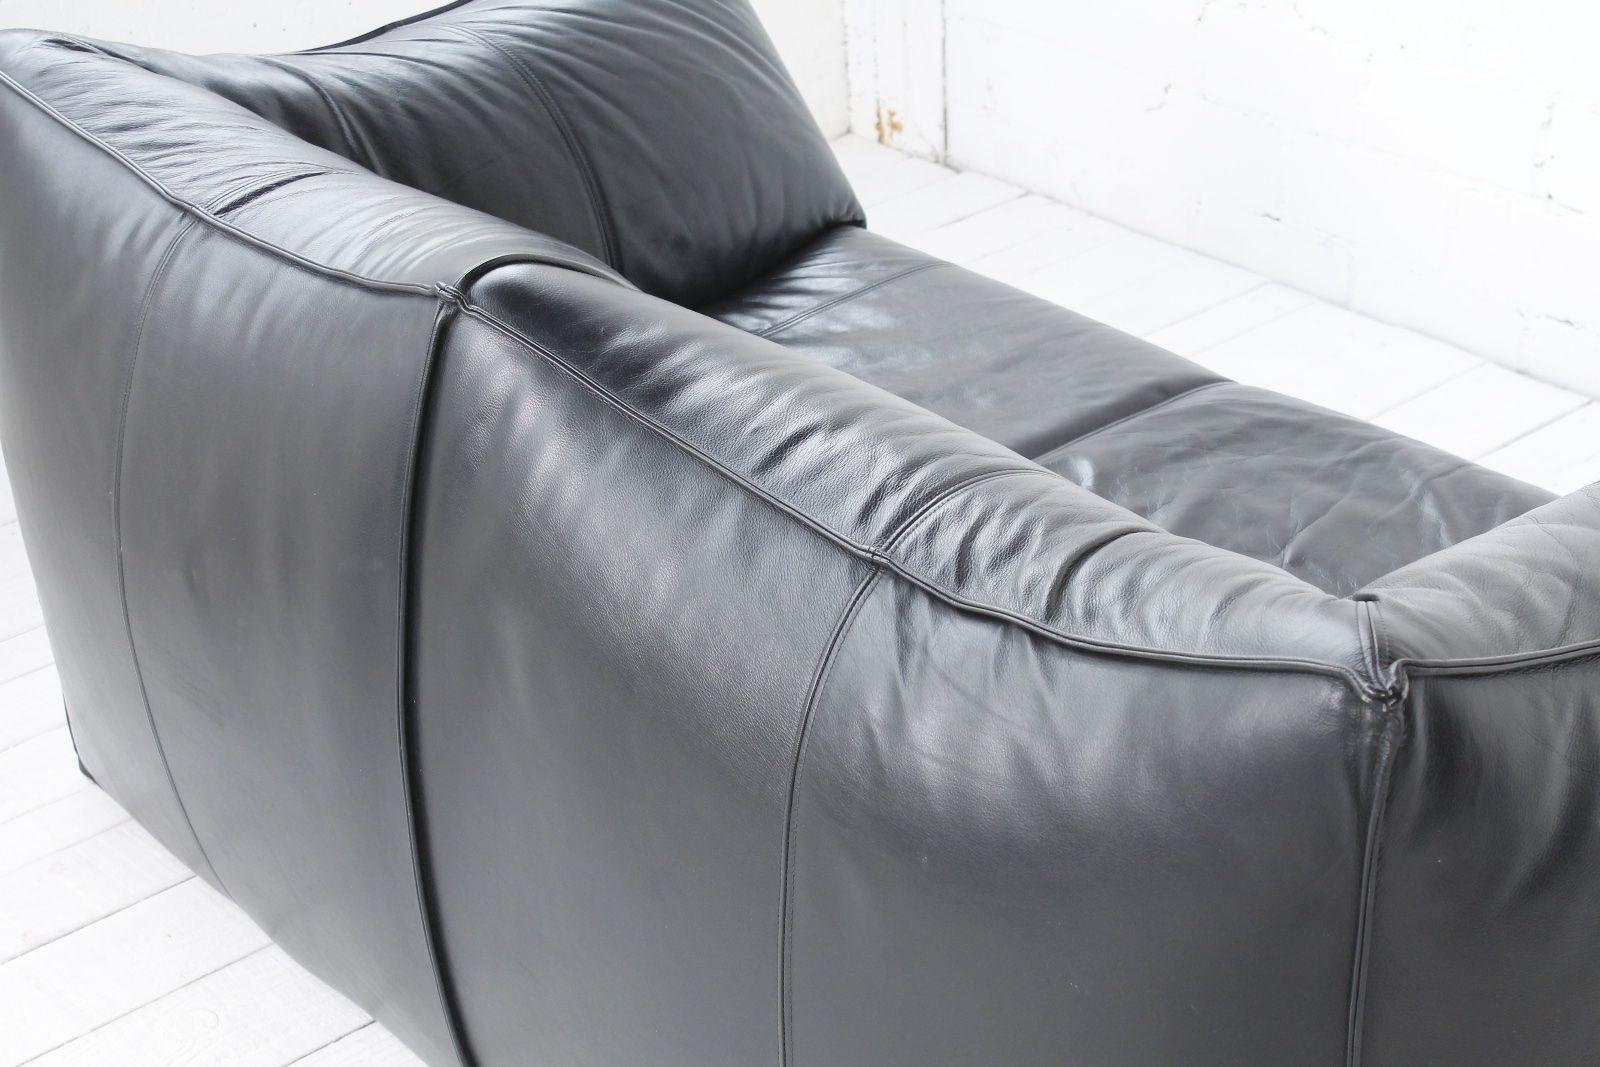 Pair of Le Bambole Sofa by Mario Bellini for B&B Italia black Leather Vintage 1